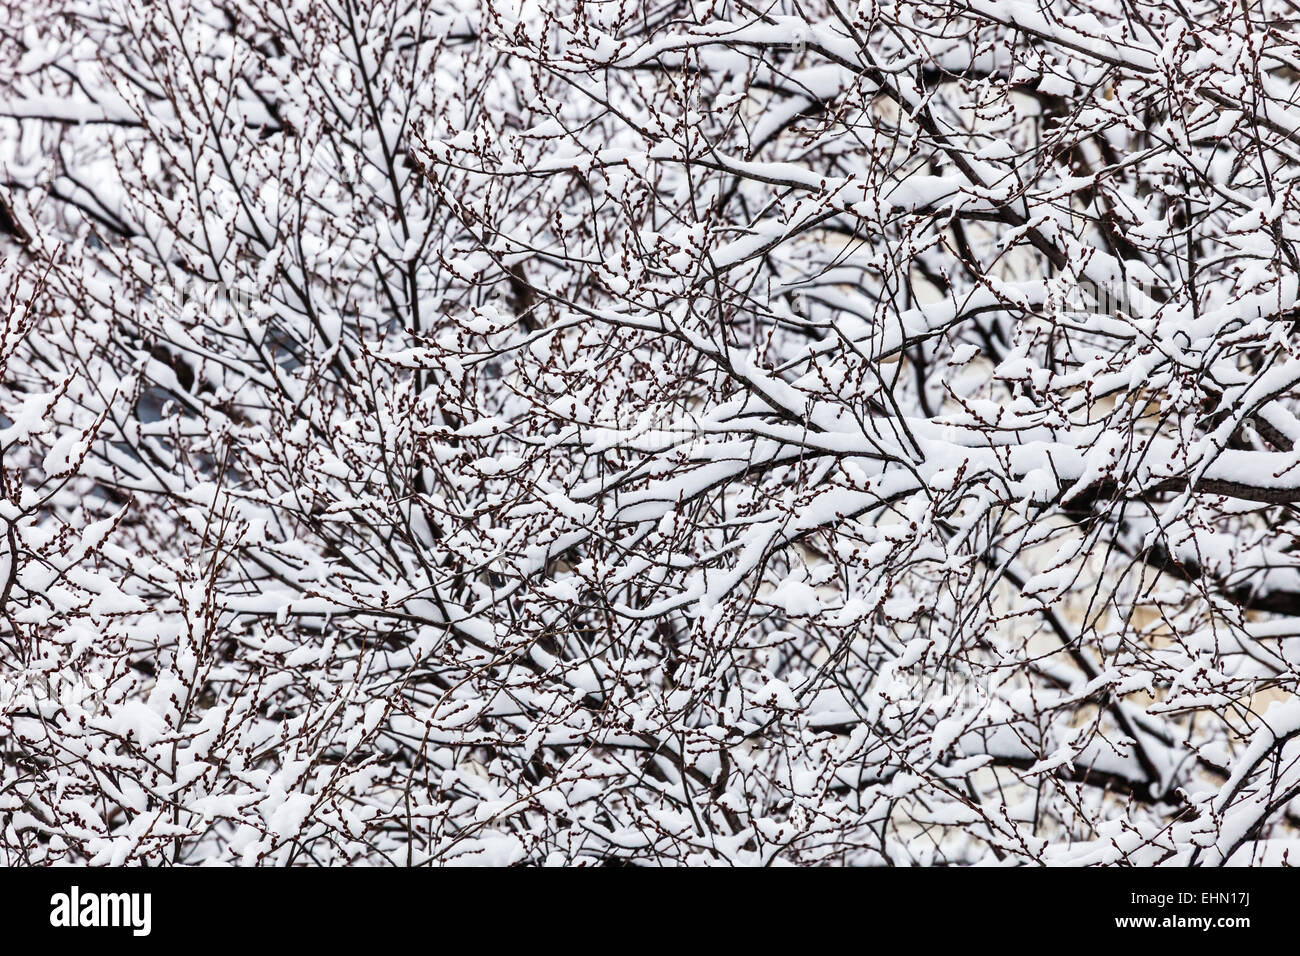 Snow on trees. Stock Photo